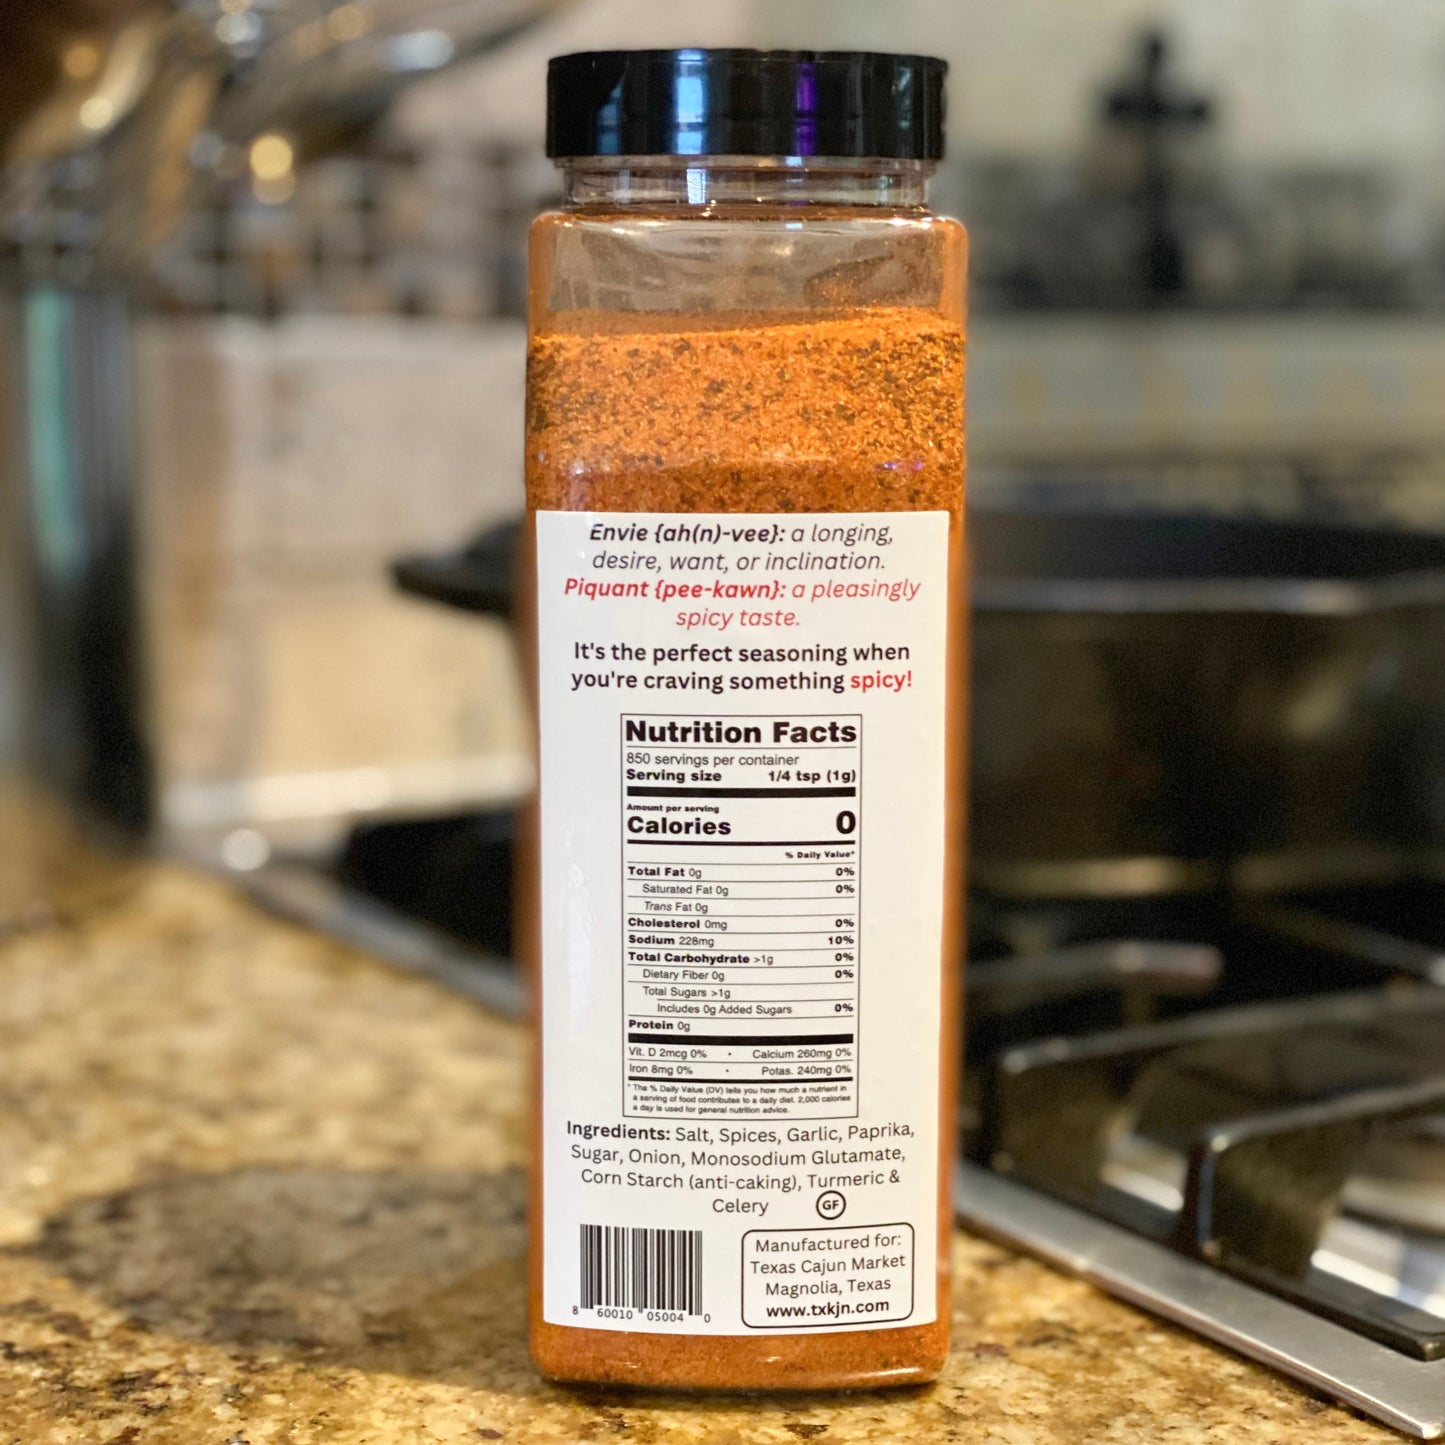 ENVIE PIQUANT All-Purpose Seasoning Salt - 30 oz.